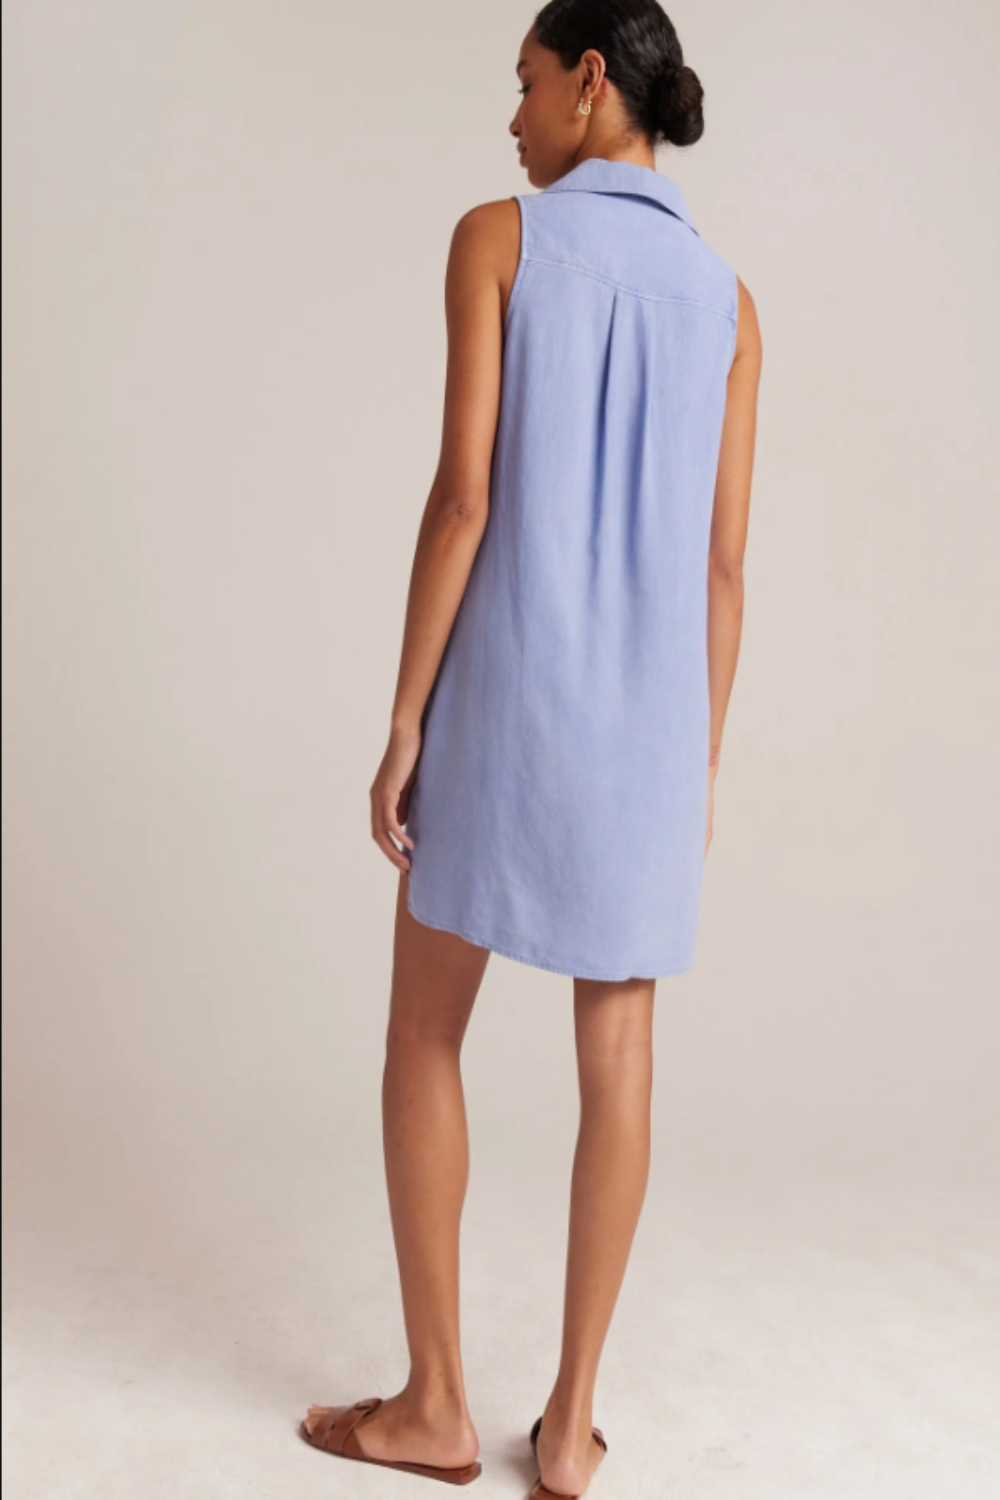 Sleeveless A-line Dress in Peri Blue